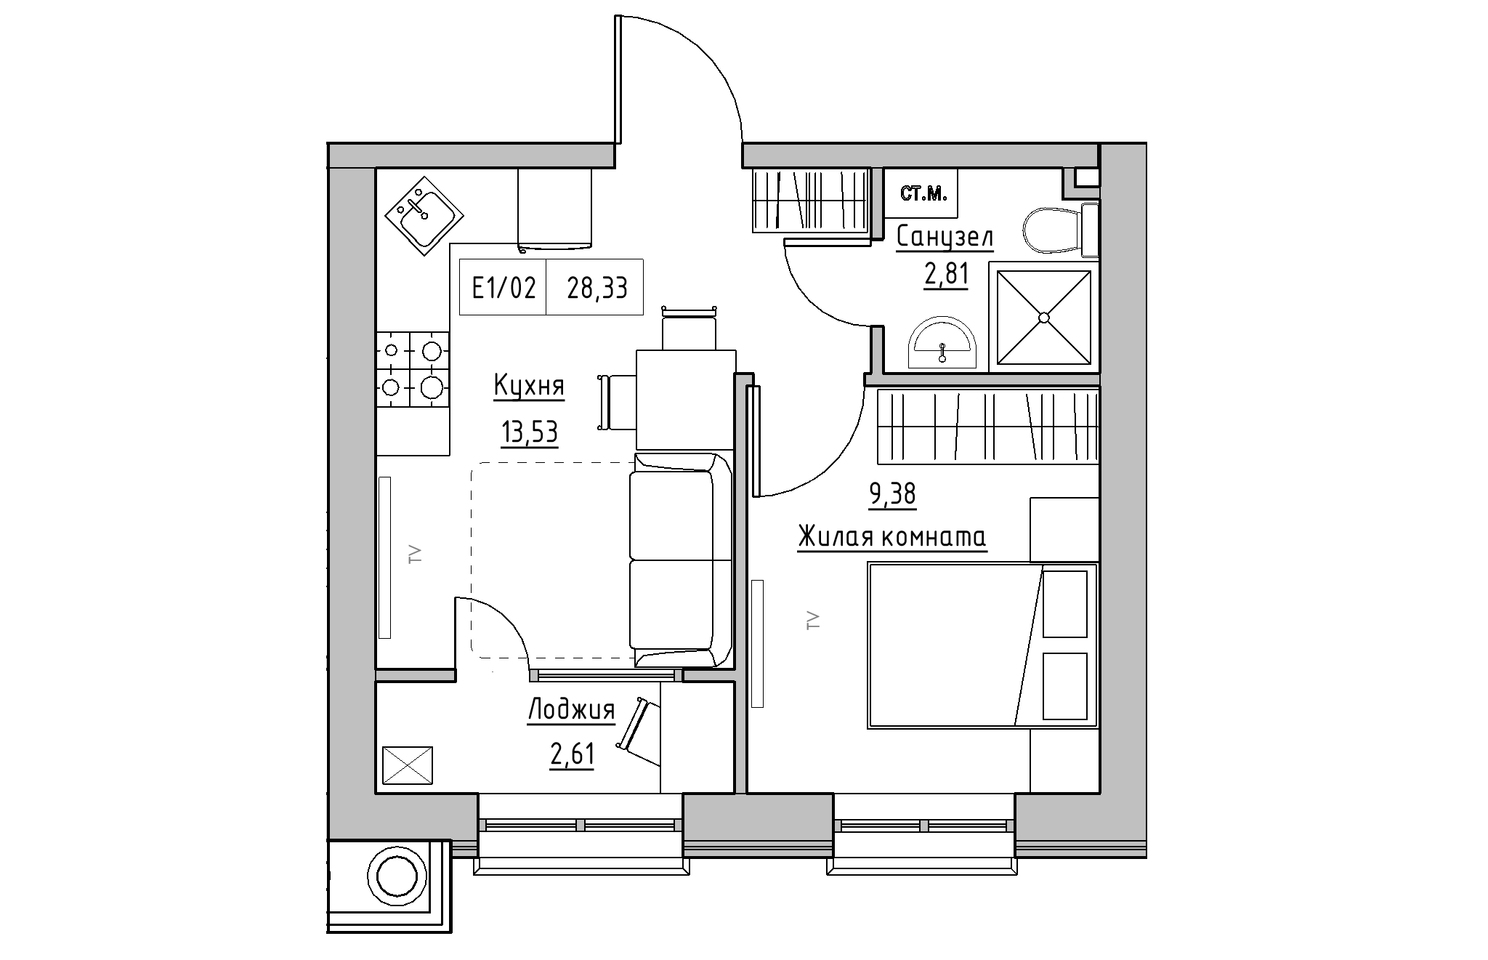 Planning 1-rm flats area 28.33m2, KS-010-02/0001.